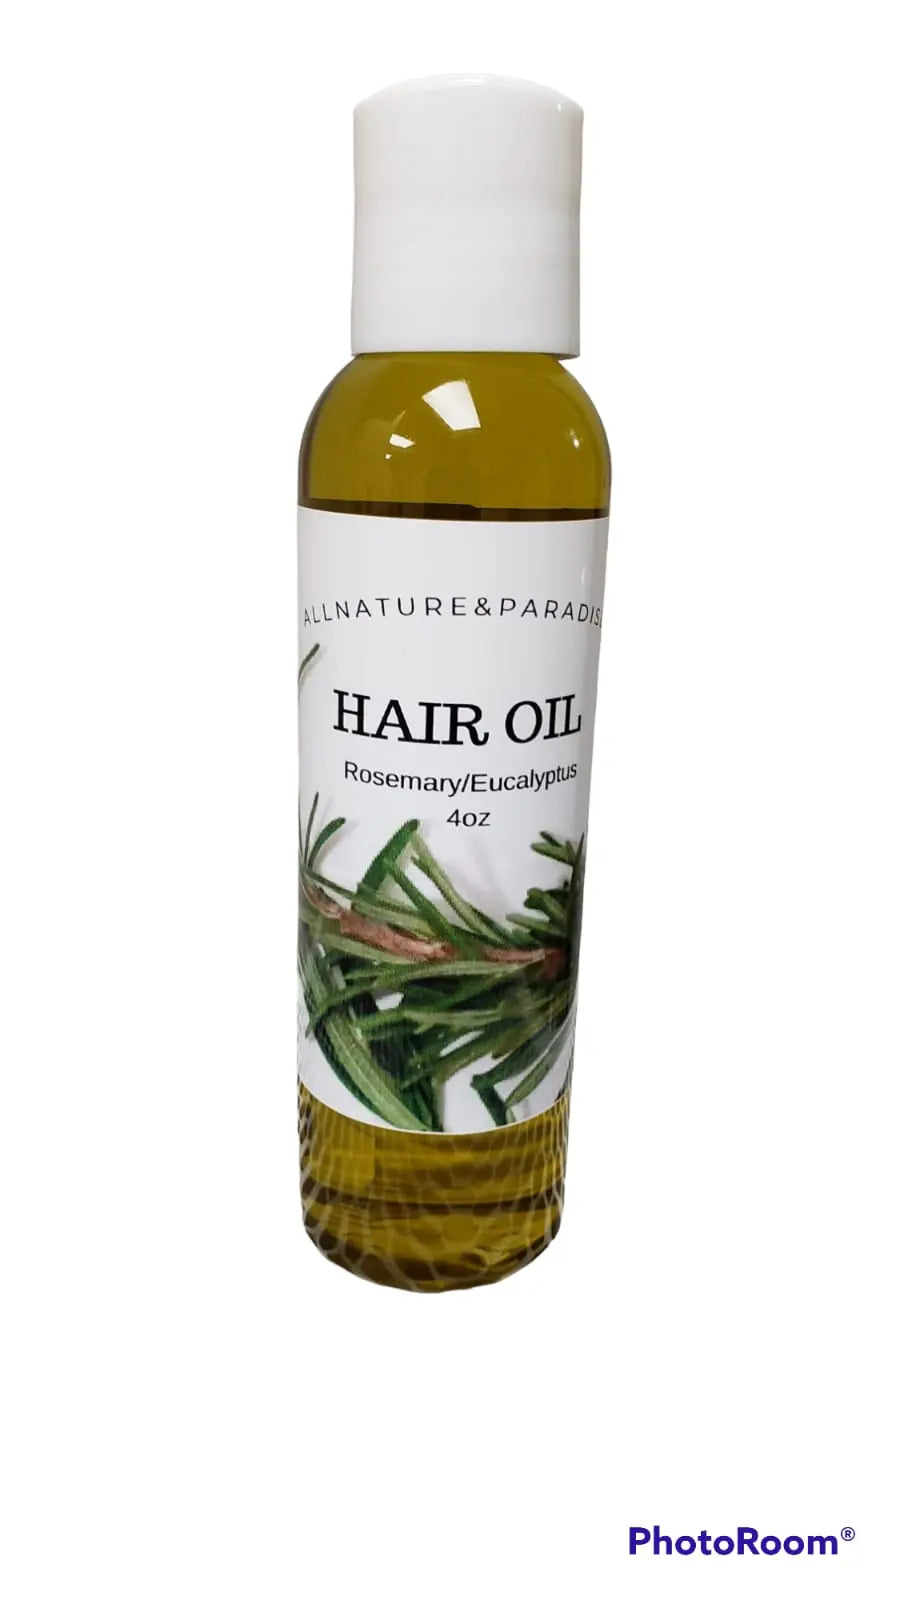 Rosemary/Eucalyptus Hair Oil All Nature & Paradise